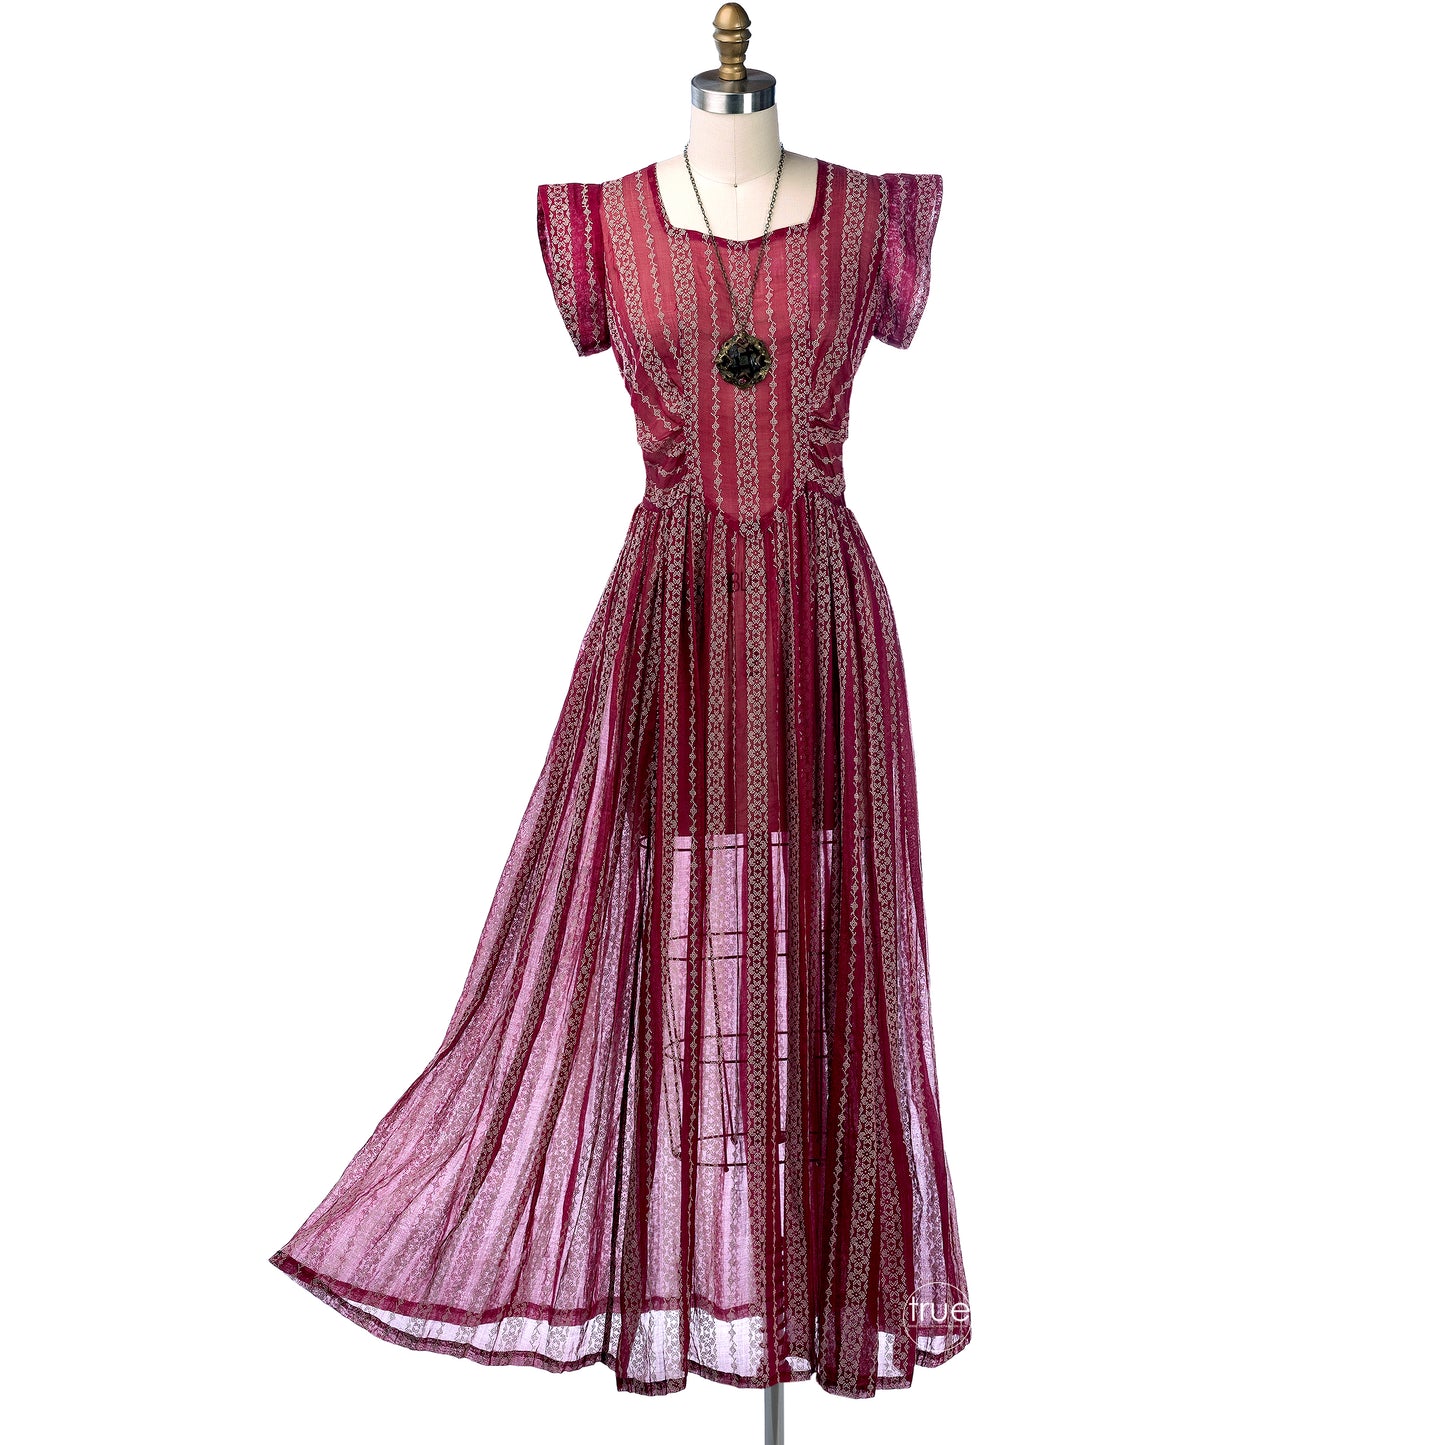 vintage 1930's dress ...flocked cranberry organza semi-sheer midi dress